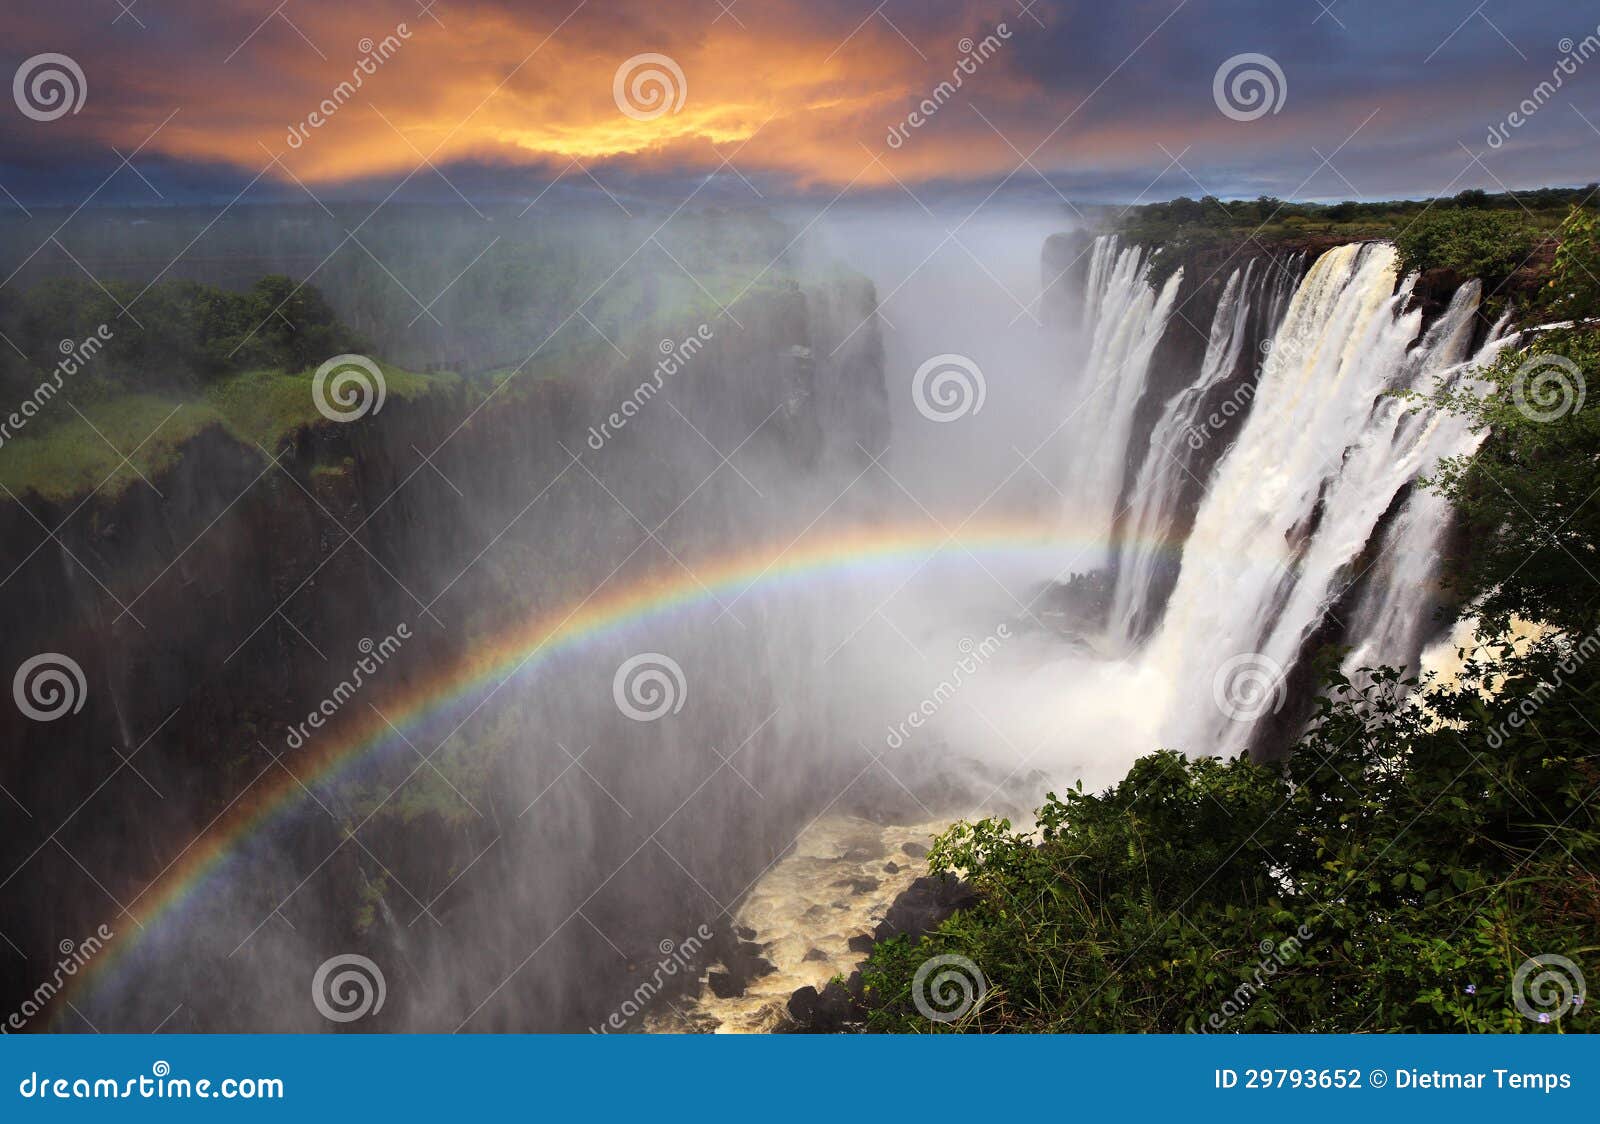 victoria falls sunset with rainbow, zambia